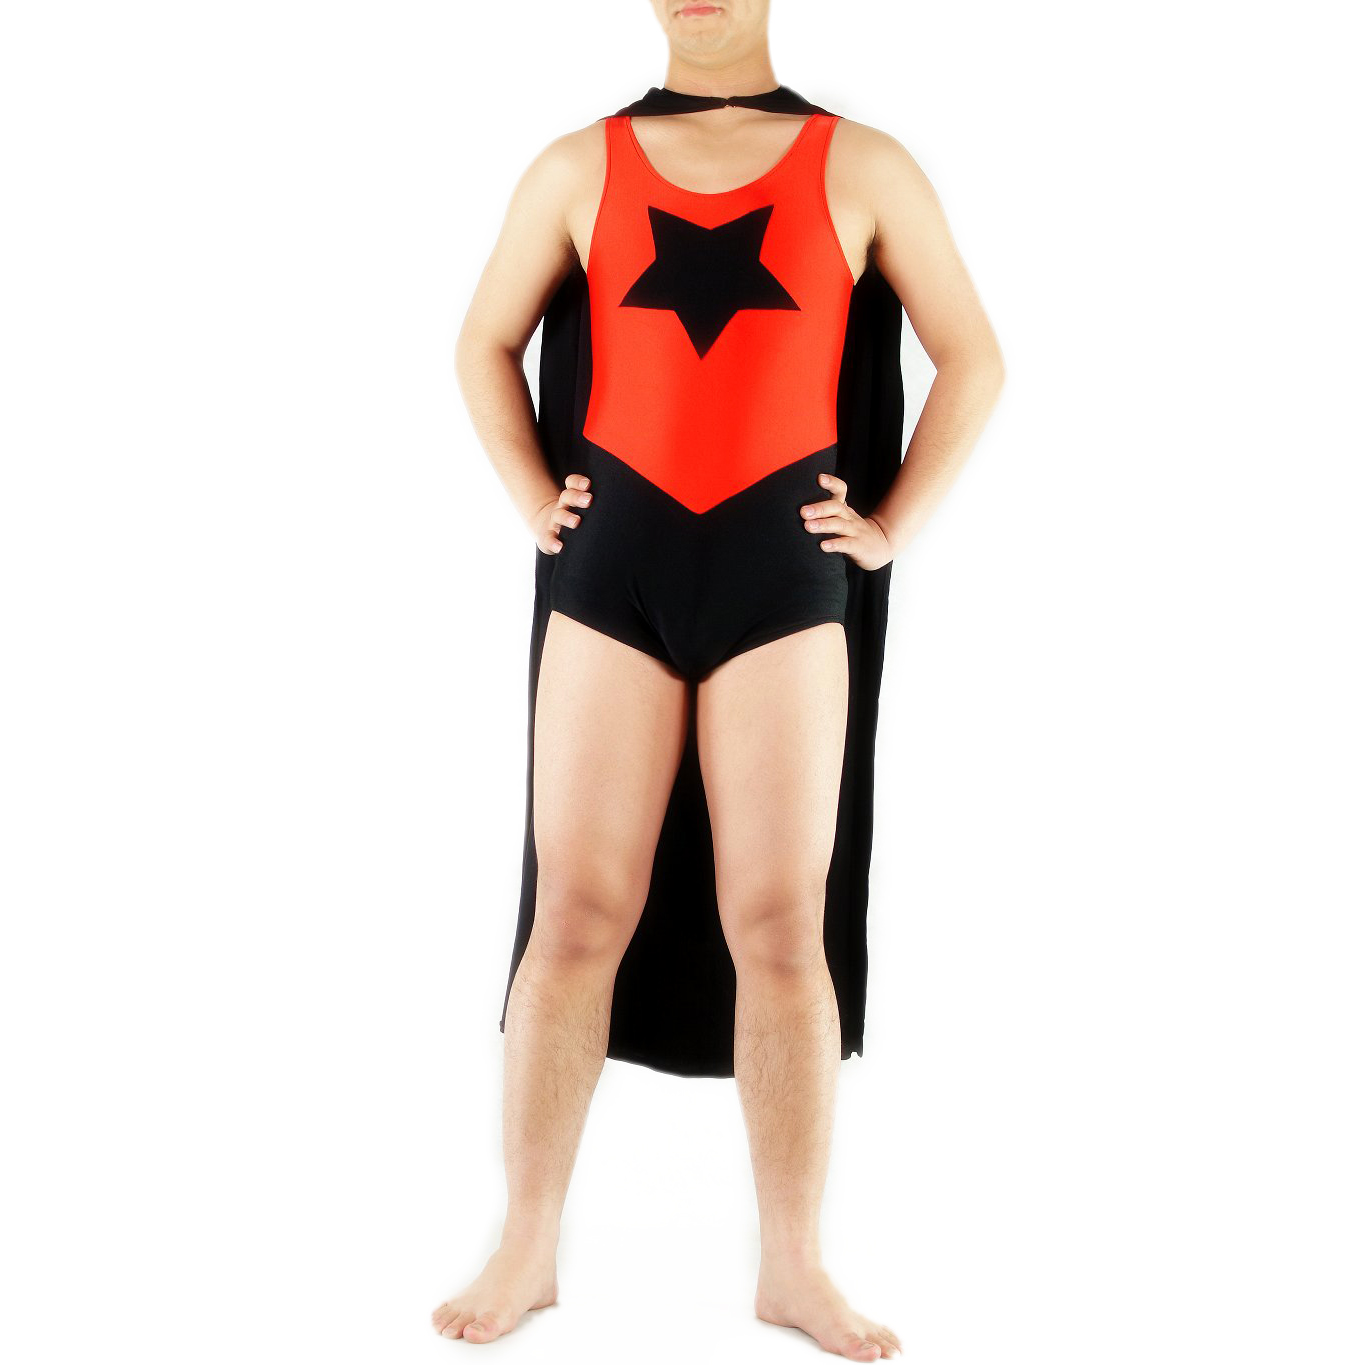 Men's Superhero Black and Red Lycra Spandex Sleeveless Catsuit (